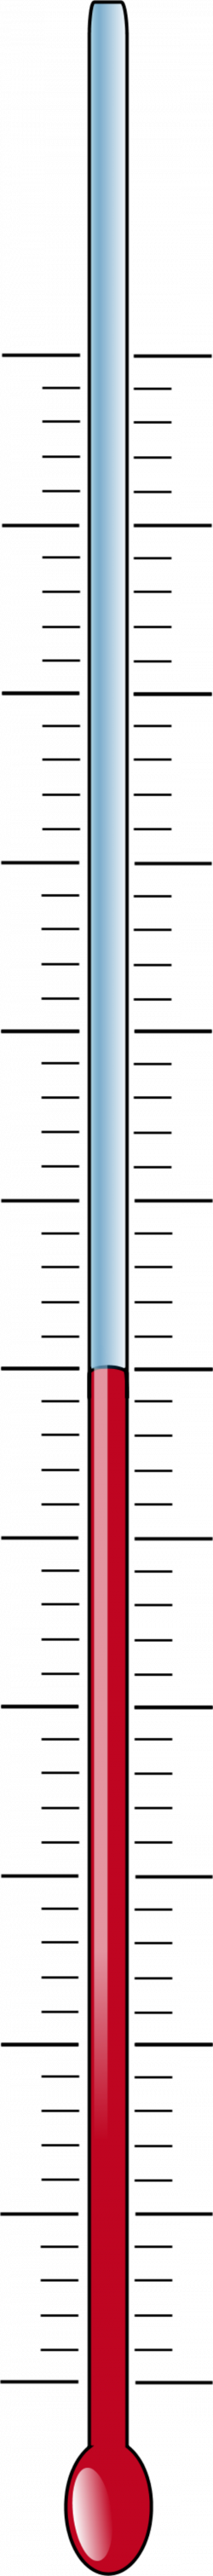 Clip Art: Clip Art Of Thermometer